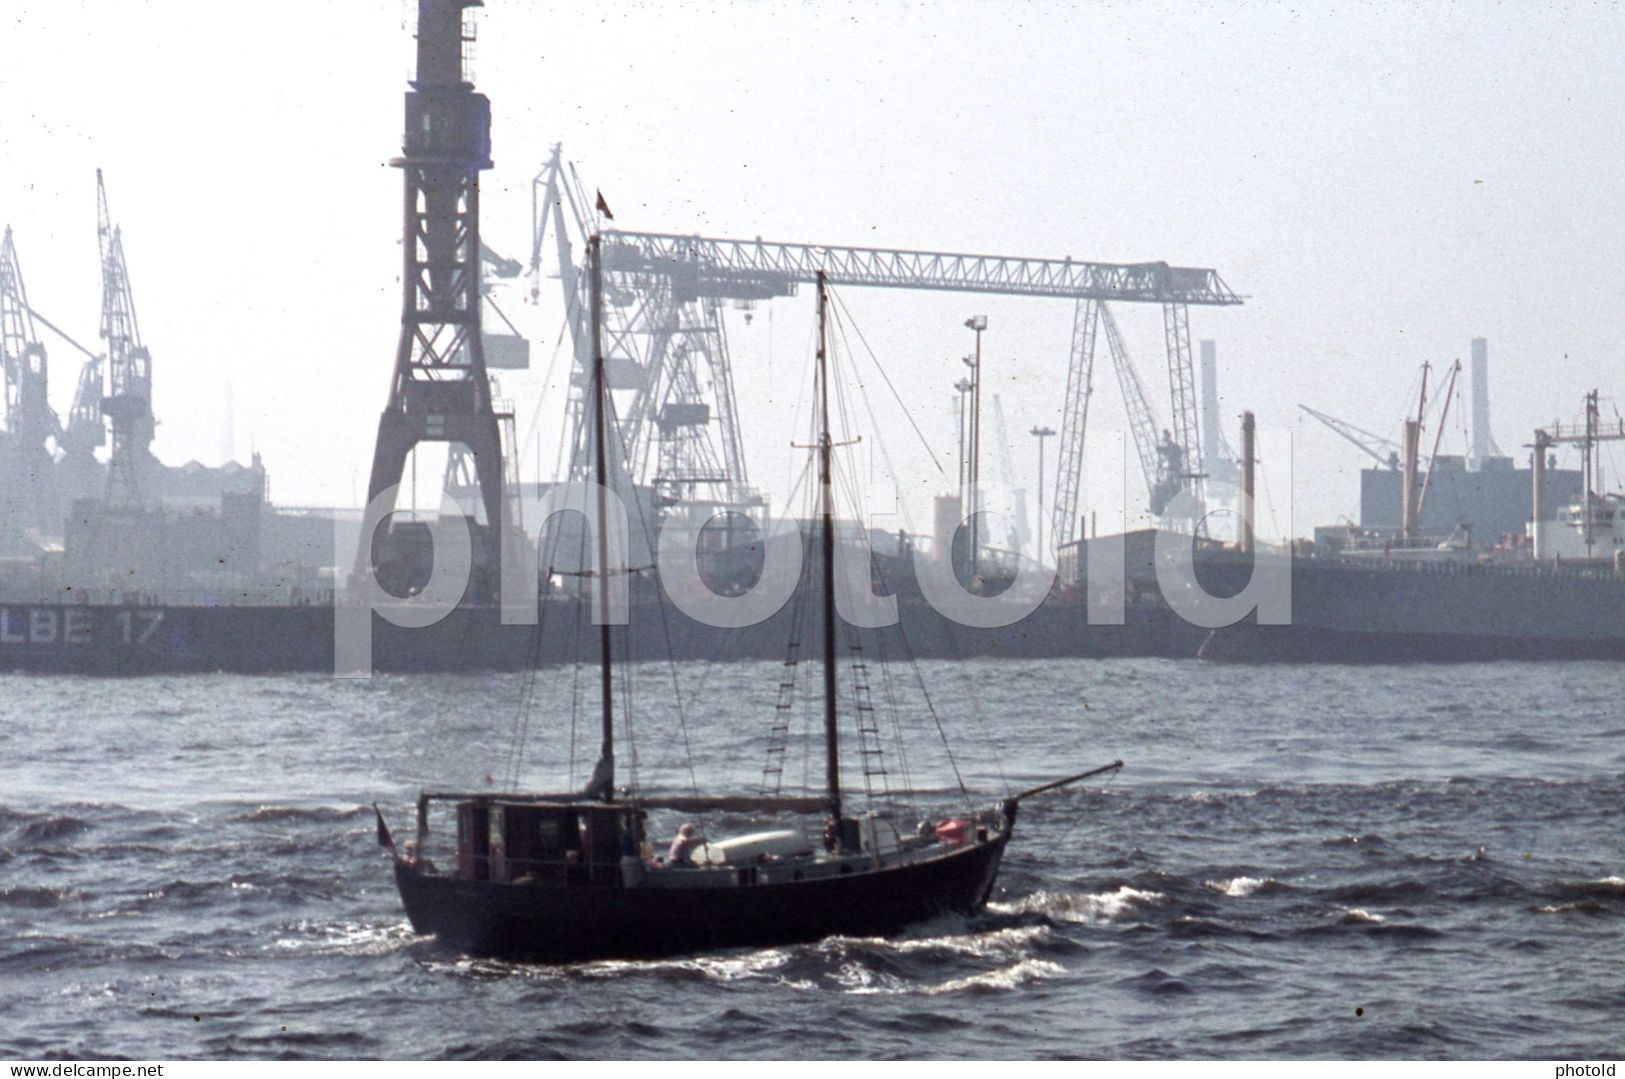 4 SLIDES SET 1970s SHIP VESSEL PORT HAMBURG GERMANY 35mm ORIGINAL AMATEUR DIAPOSITIVE SLIDE Not PHOTO No FOTO NB4108 - Diapositives